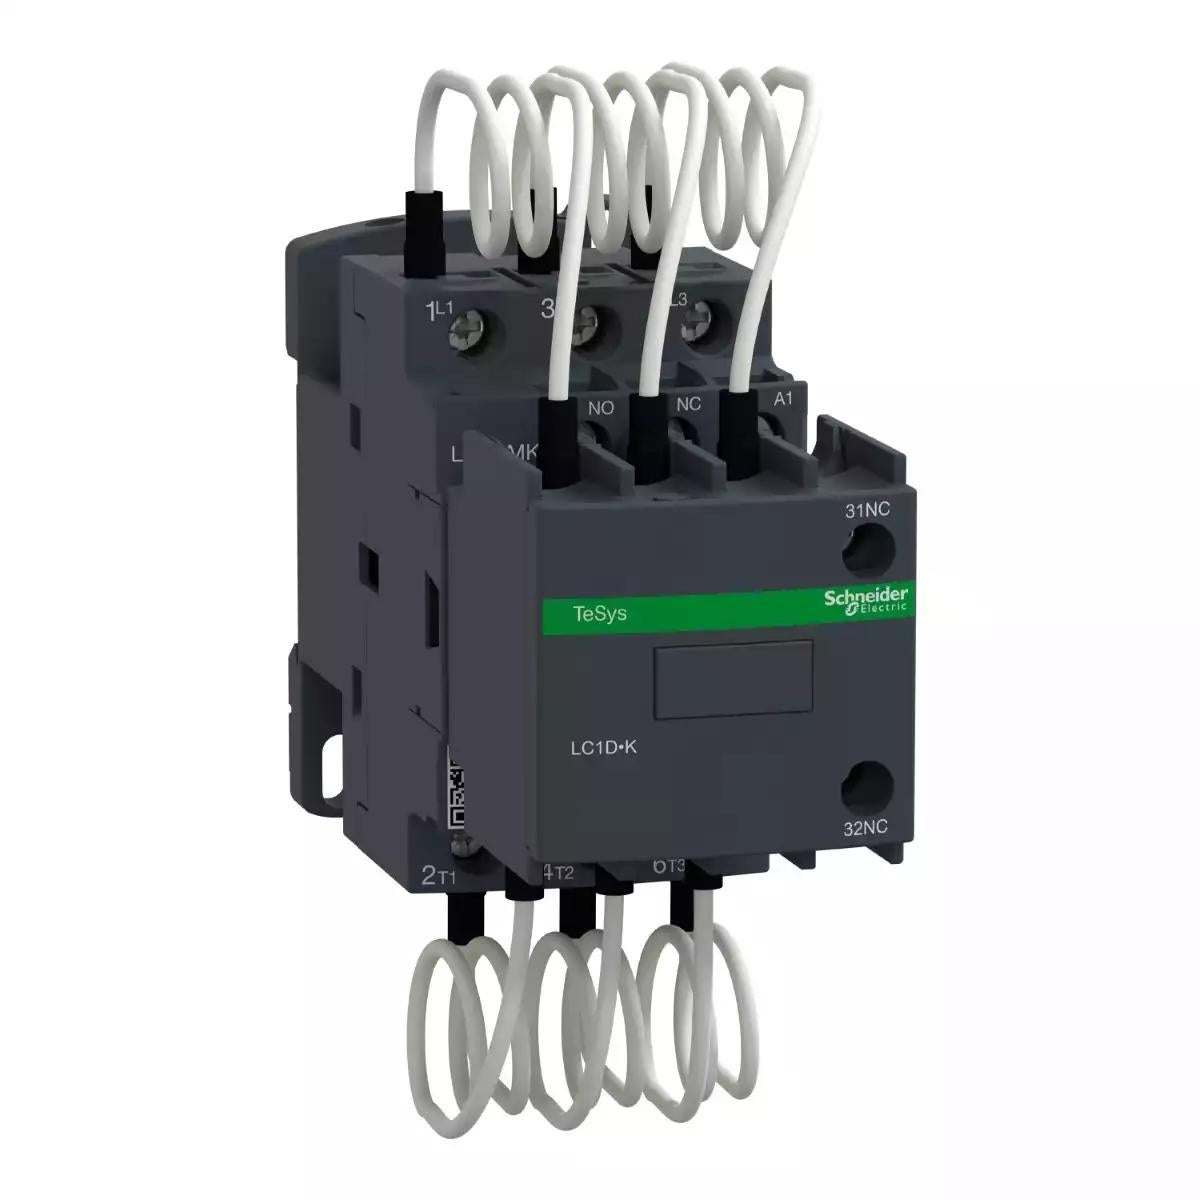 Capacitor contactor, TeSys D, 25 kVAR at 400 V/50 Hz, coil 230 V AC 50/60 Hz